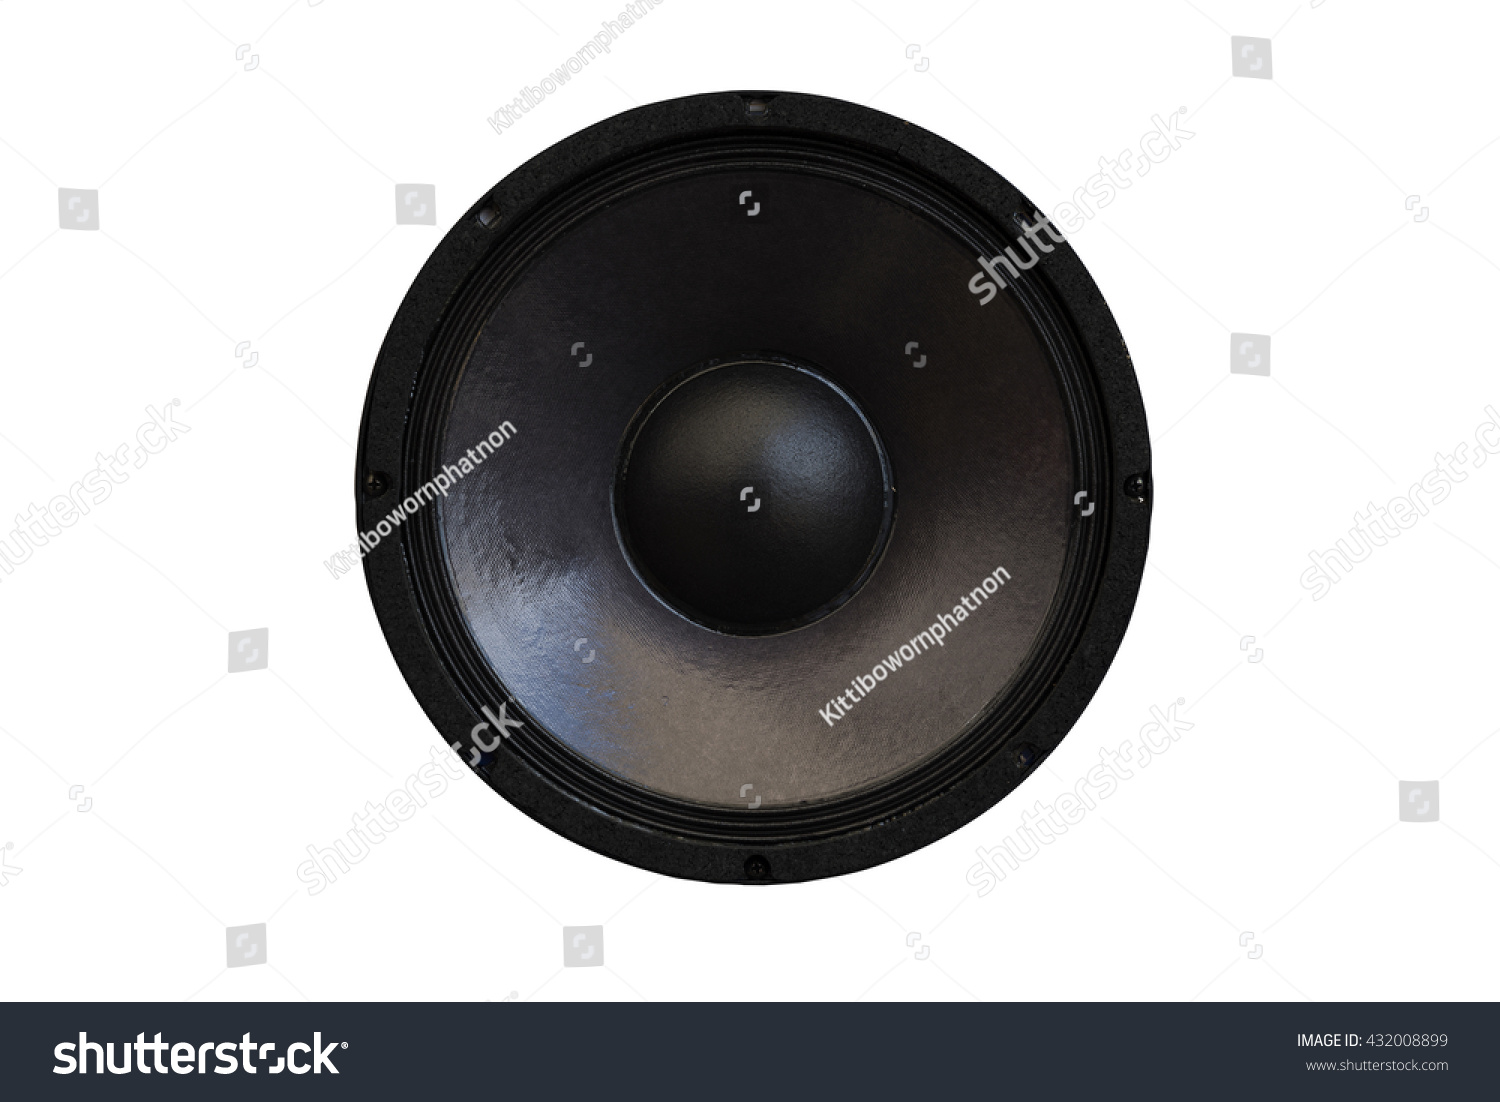 Loud speaker isolated on background #432008899